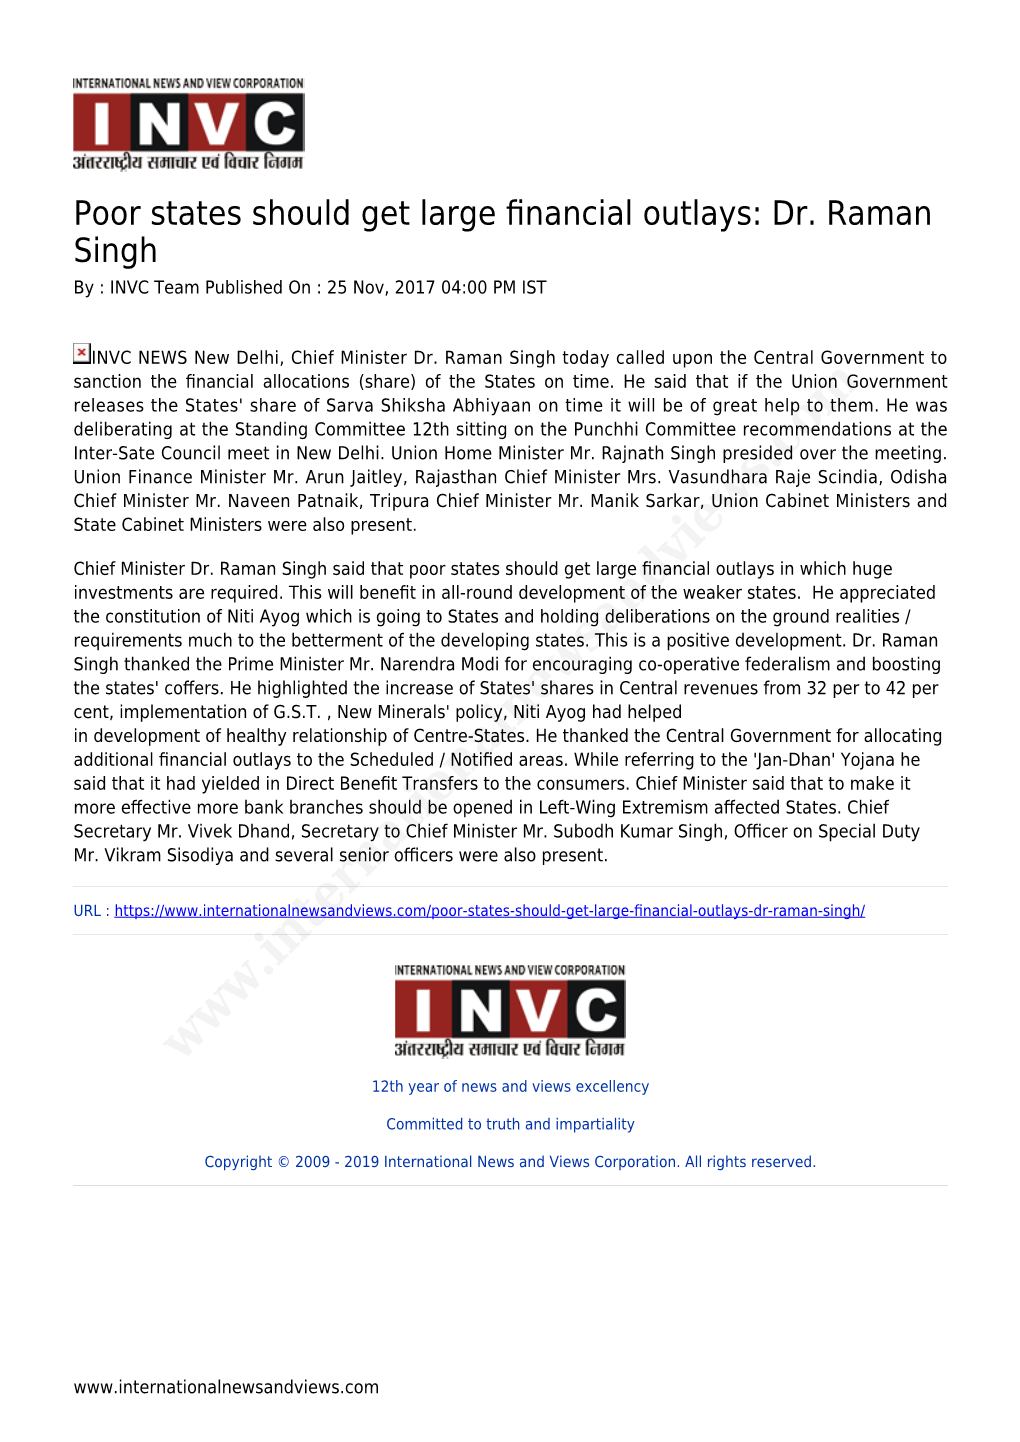 Dr. Raman Singh by : INVC Team Published on : 25 Nov, 2017 04:00 PM IST